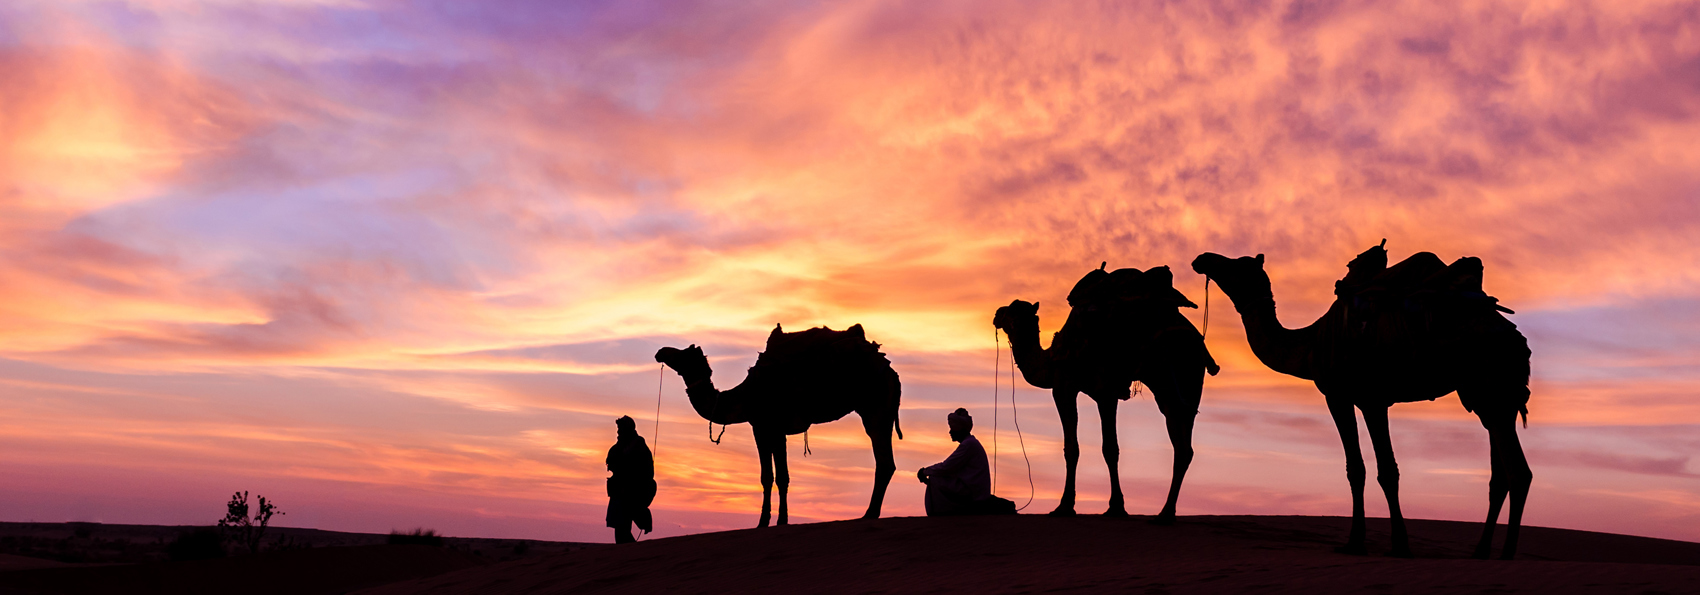 jordan - wadi rum red desert_kamel_08